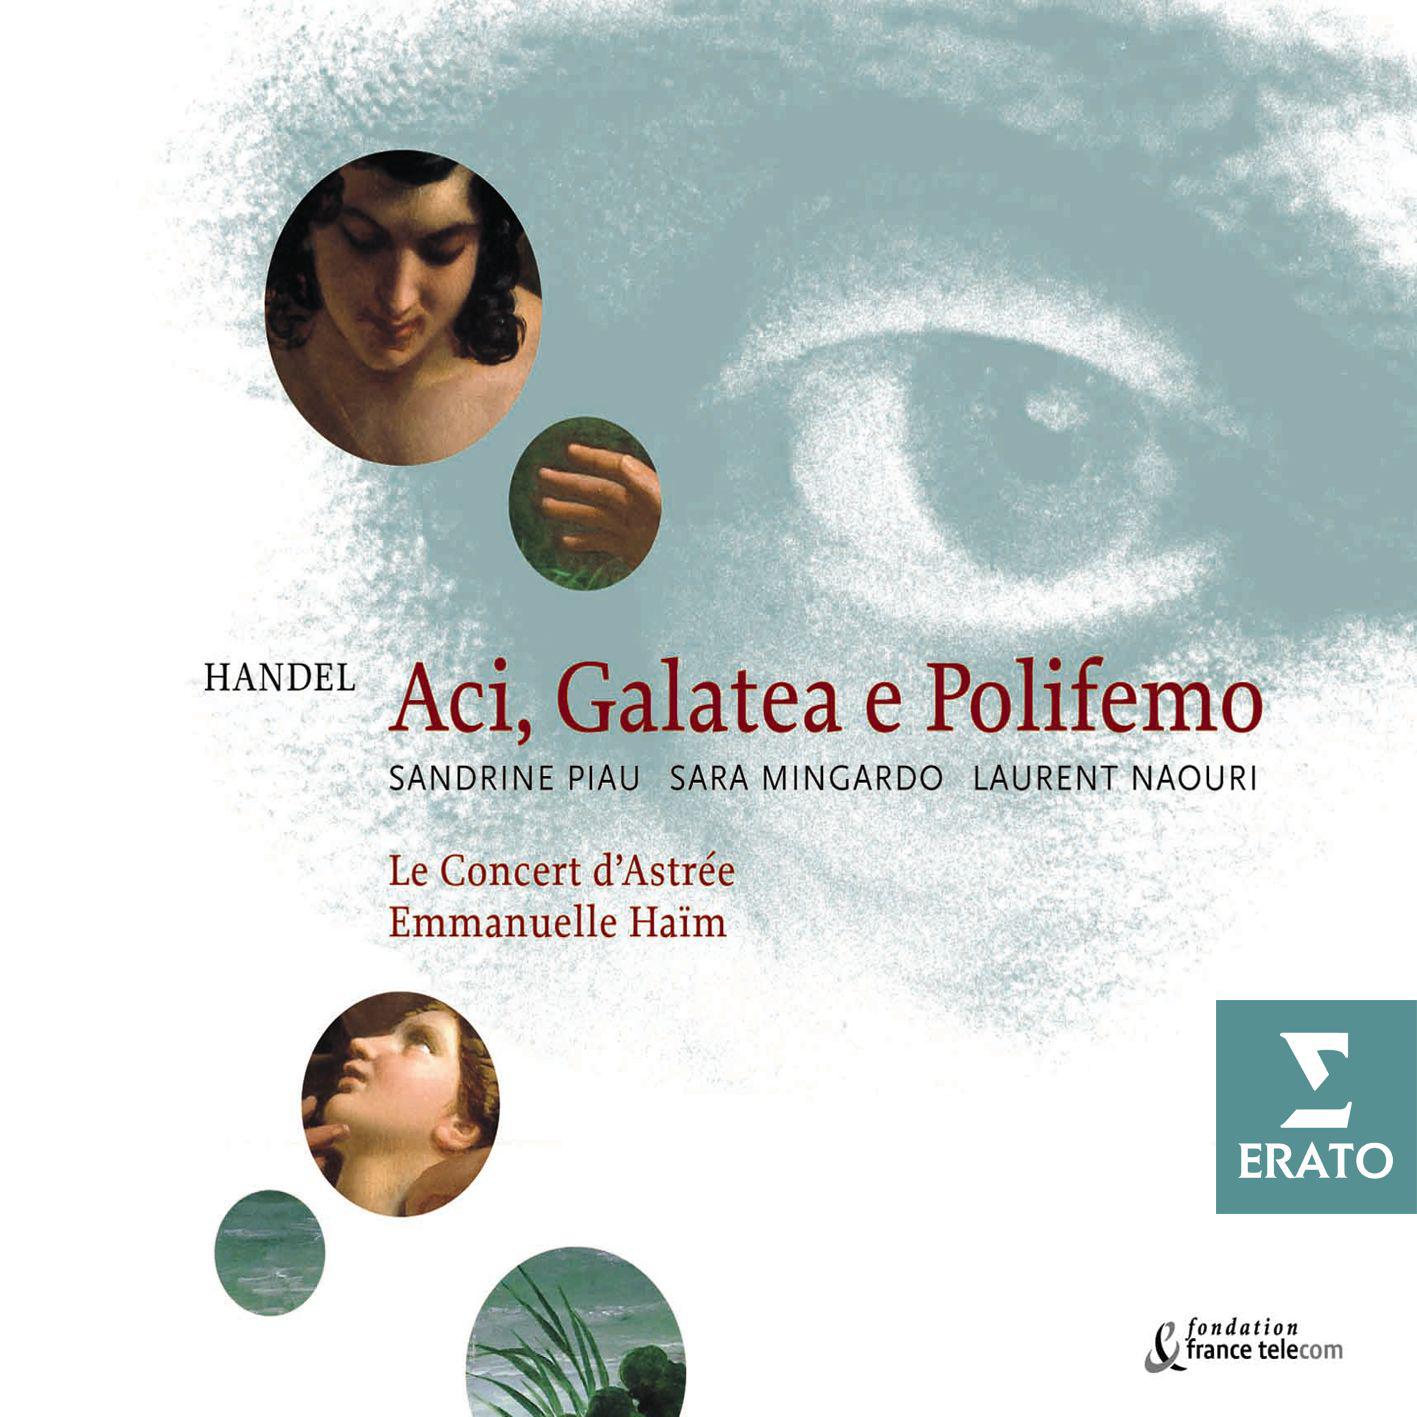 Aci, Galatea e Polifemo, Ouverture:Allegro